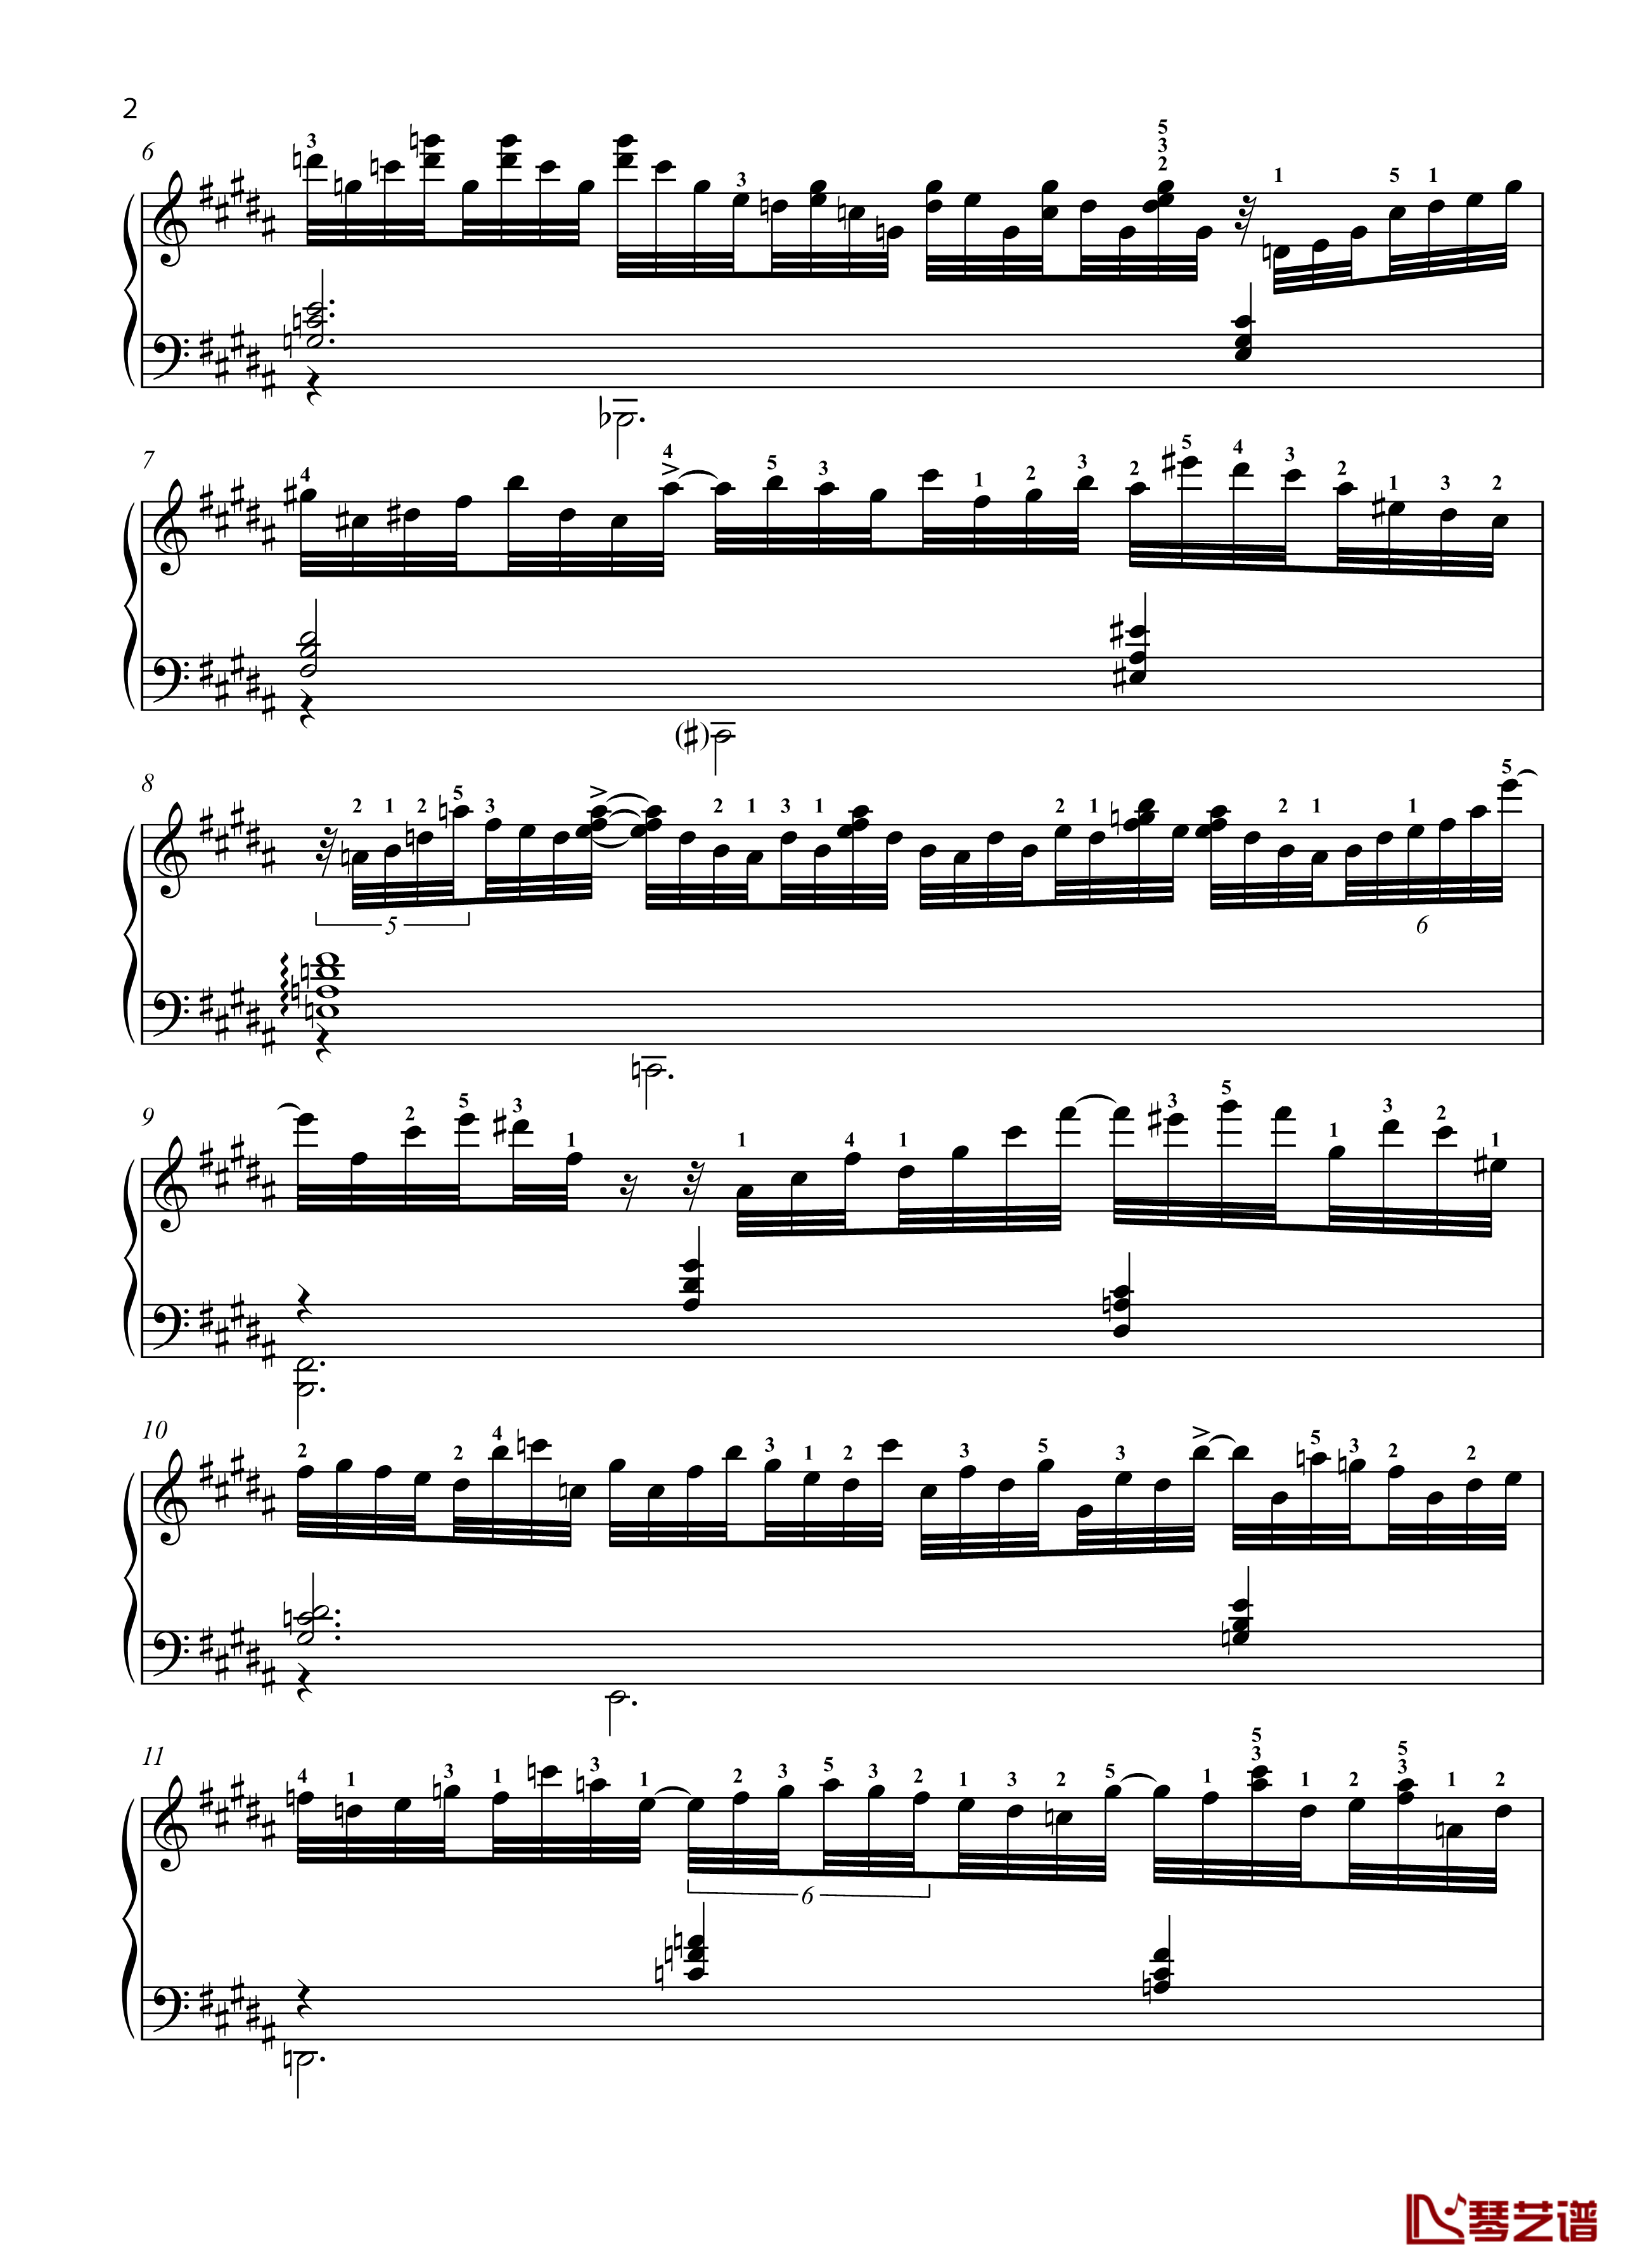 No. 4. Reminiscence钢琴谱-带指法-八首音乐会练习曲  Eight Concert ?tudes Op 40 - -爵士-尼古拉·凯帕斯汀2